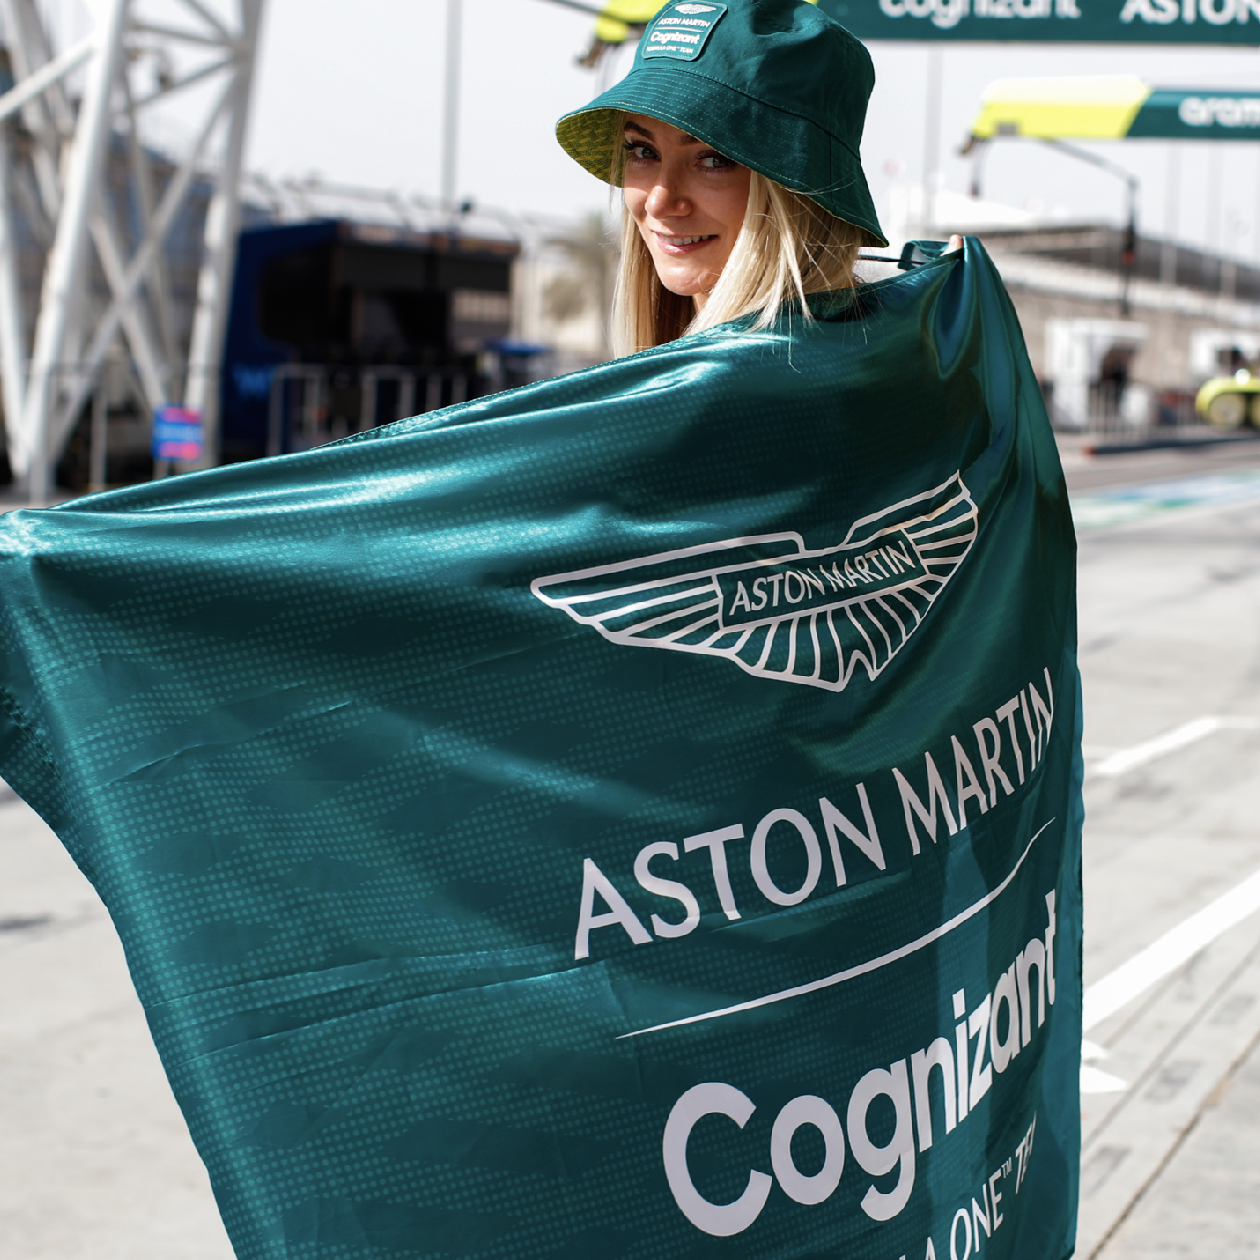 Aston Martin Aramco Cognizant Formula 1™ Team